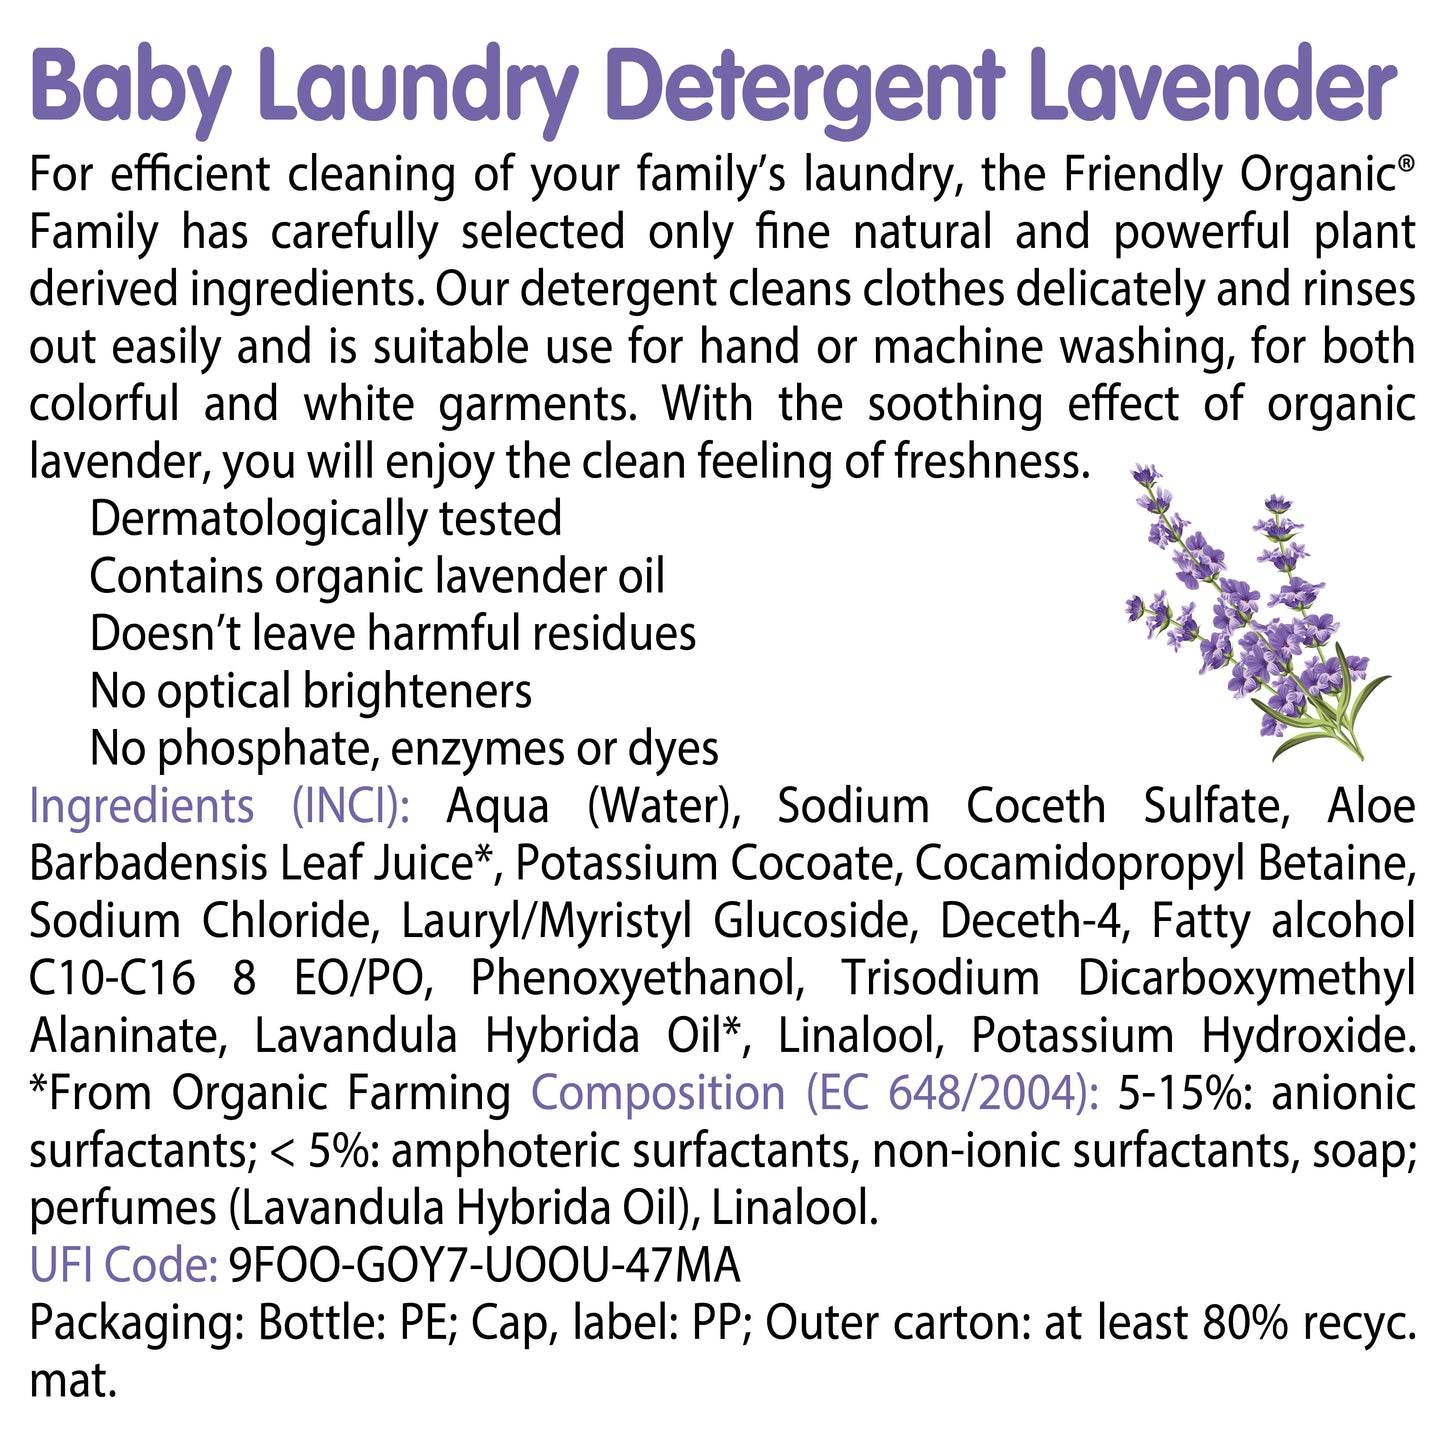 Friendly Organic Lavender Baby Laundry Detergent, White